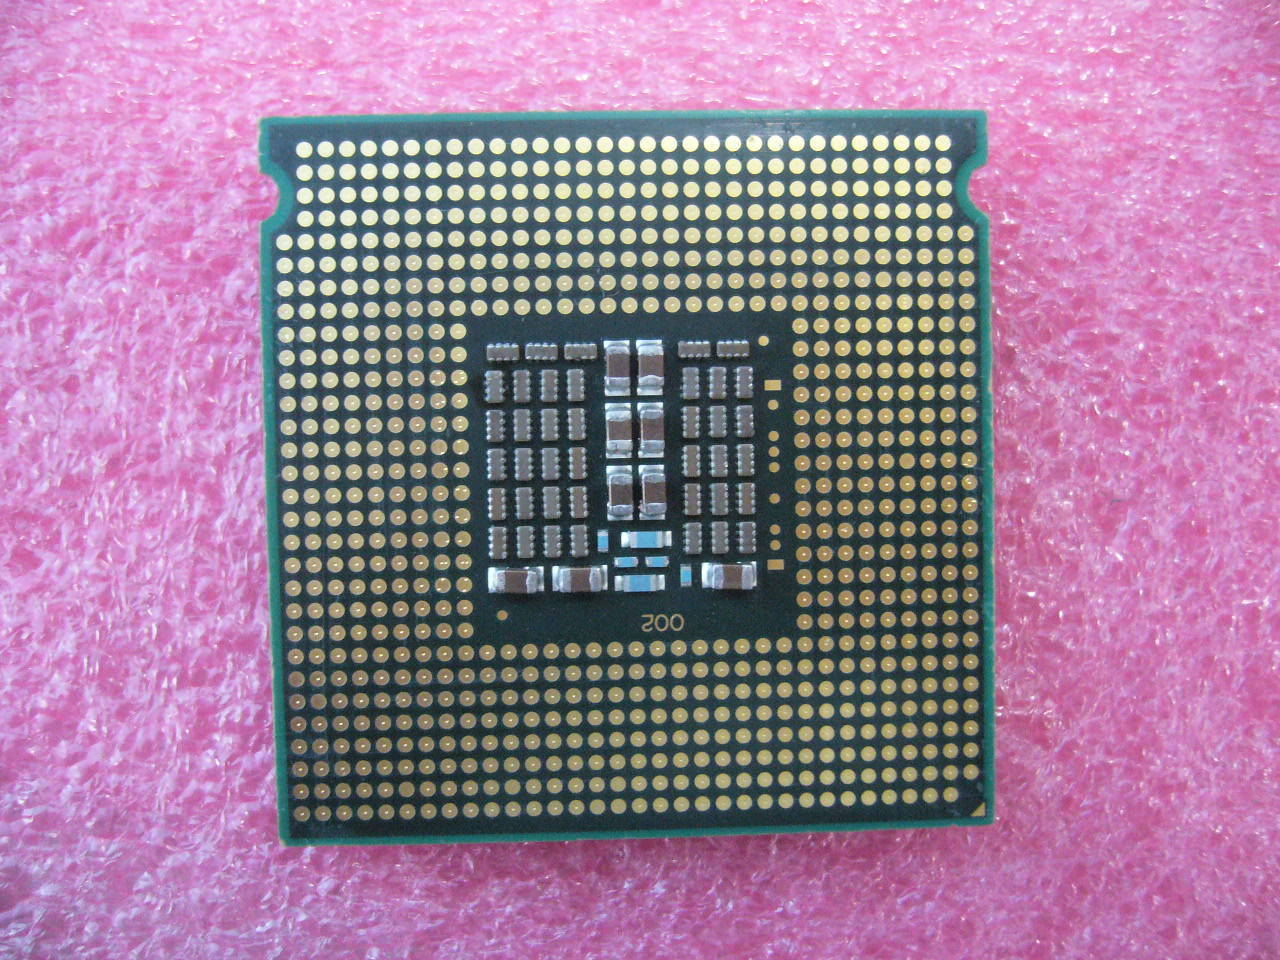 QTY 1x Intel Xeon CPU Quad Core E5430 2.66Ghz/12MB/1333Mhz LGA771 SLANU SLBBK - Click Image to Close